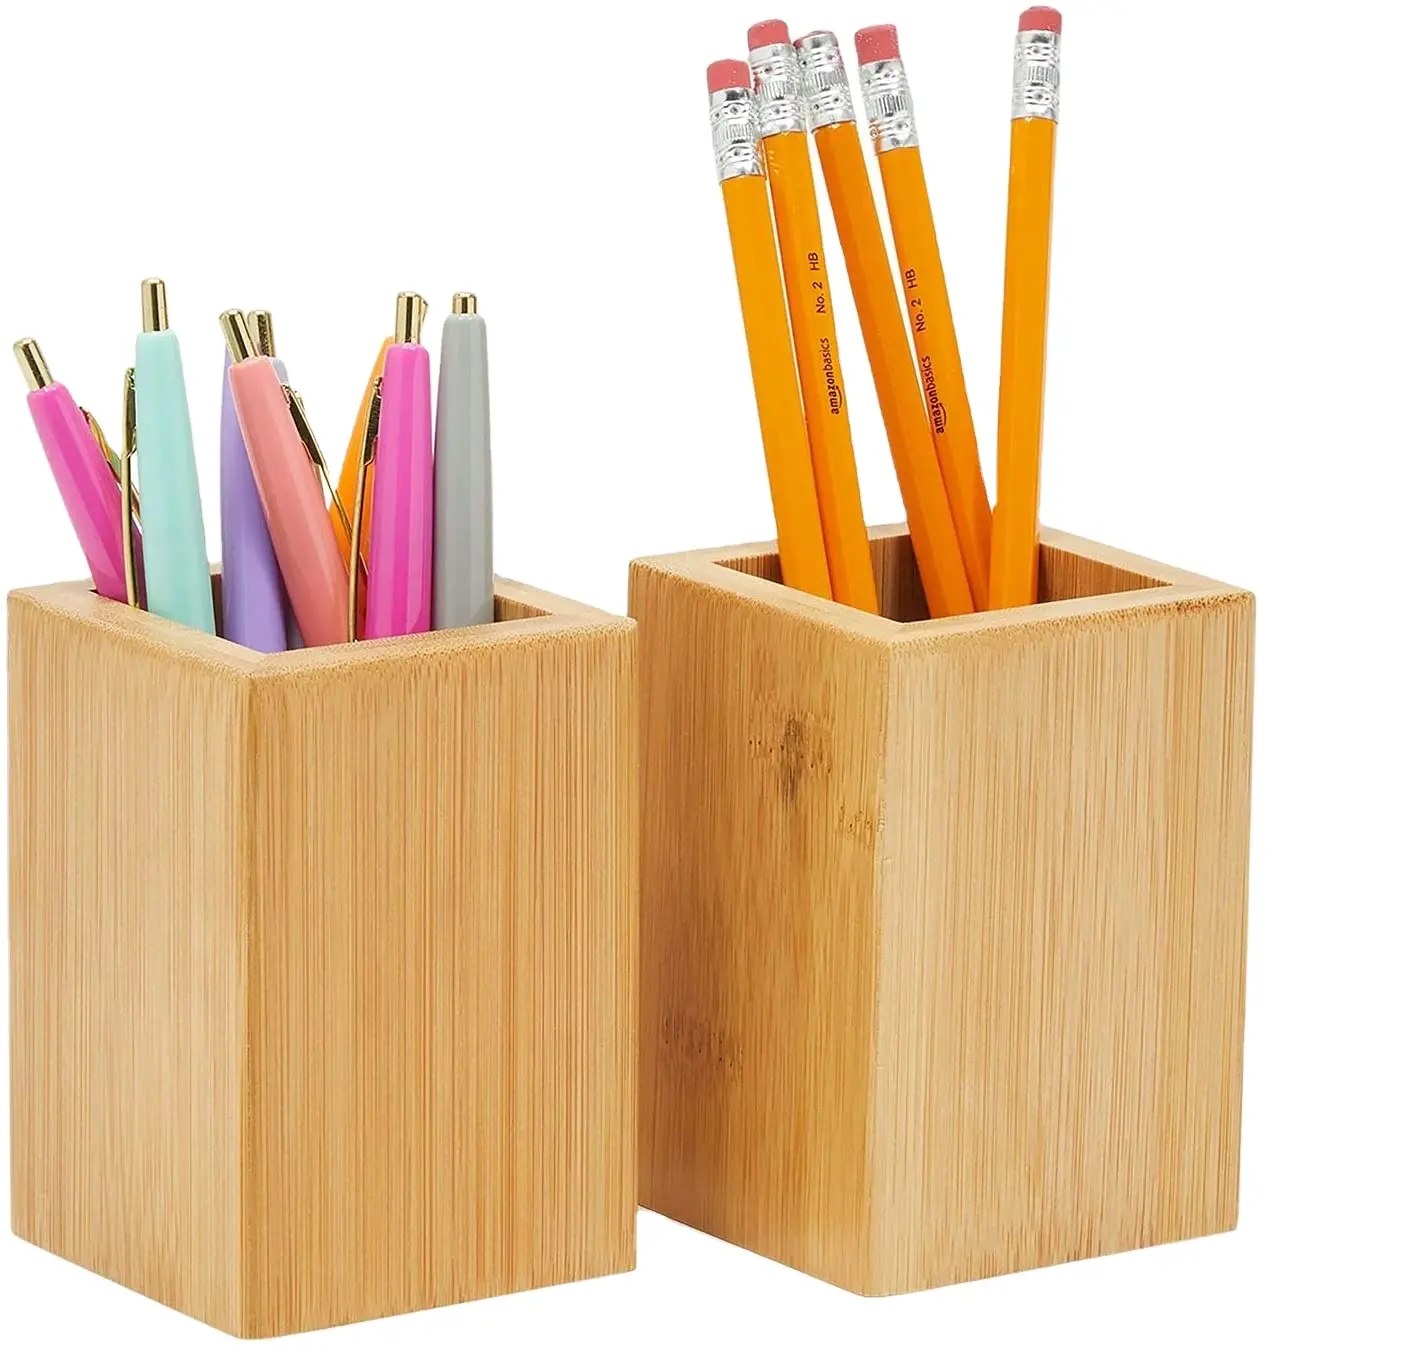 Classic Bamboo Office Desktop Organizer for Wooden Pen Pencil Holder Supplies